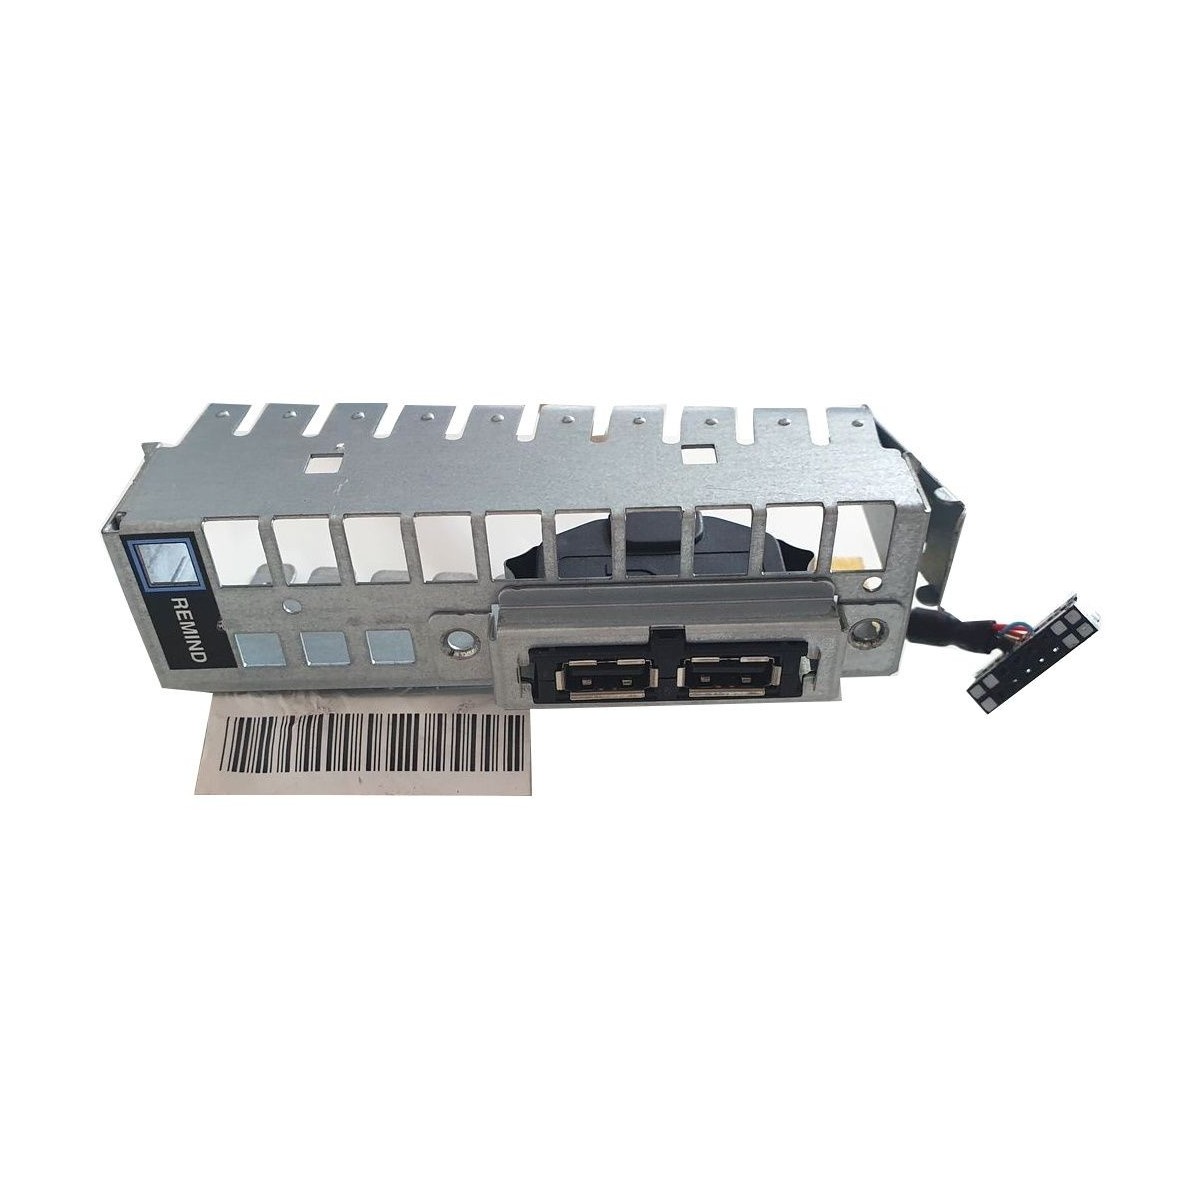 USB PANEL IBM X3500 M2 46C7891-100